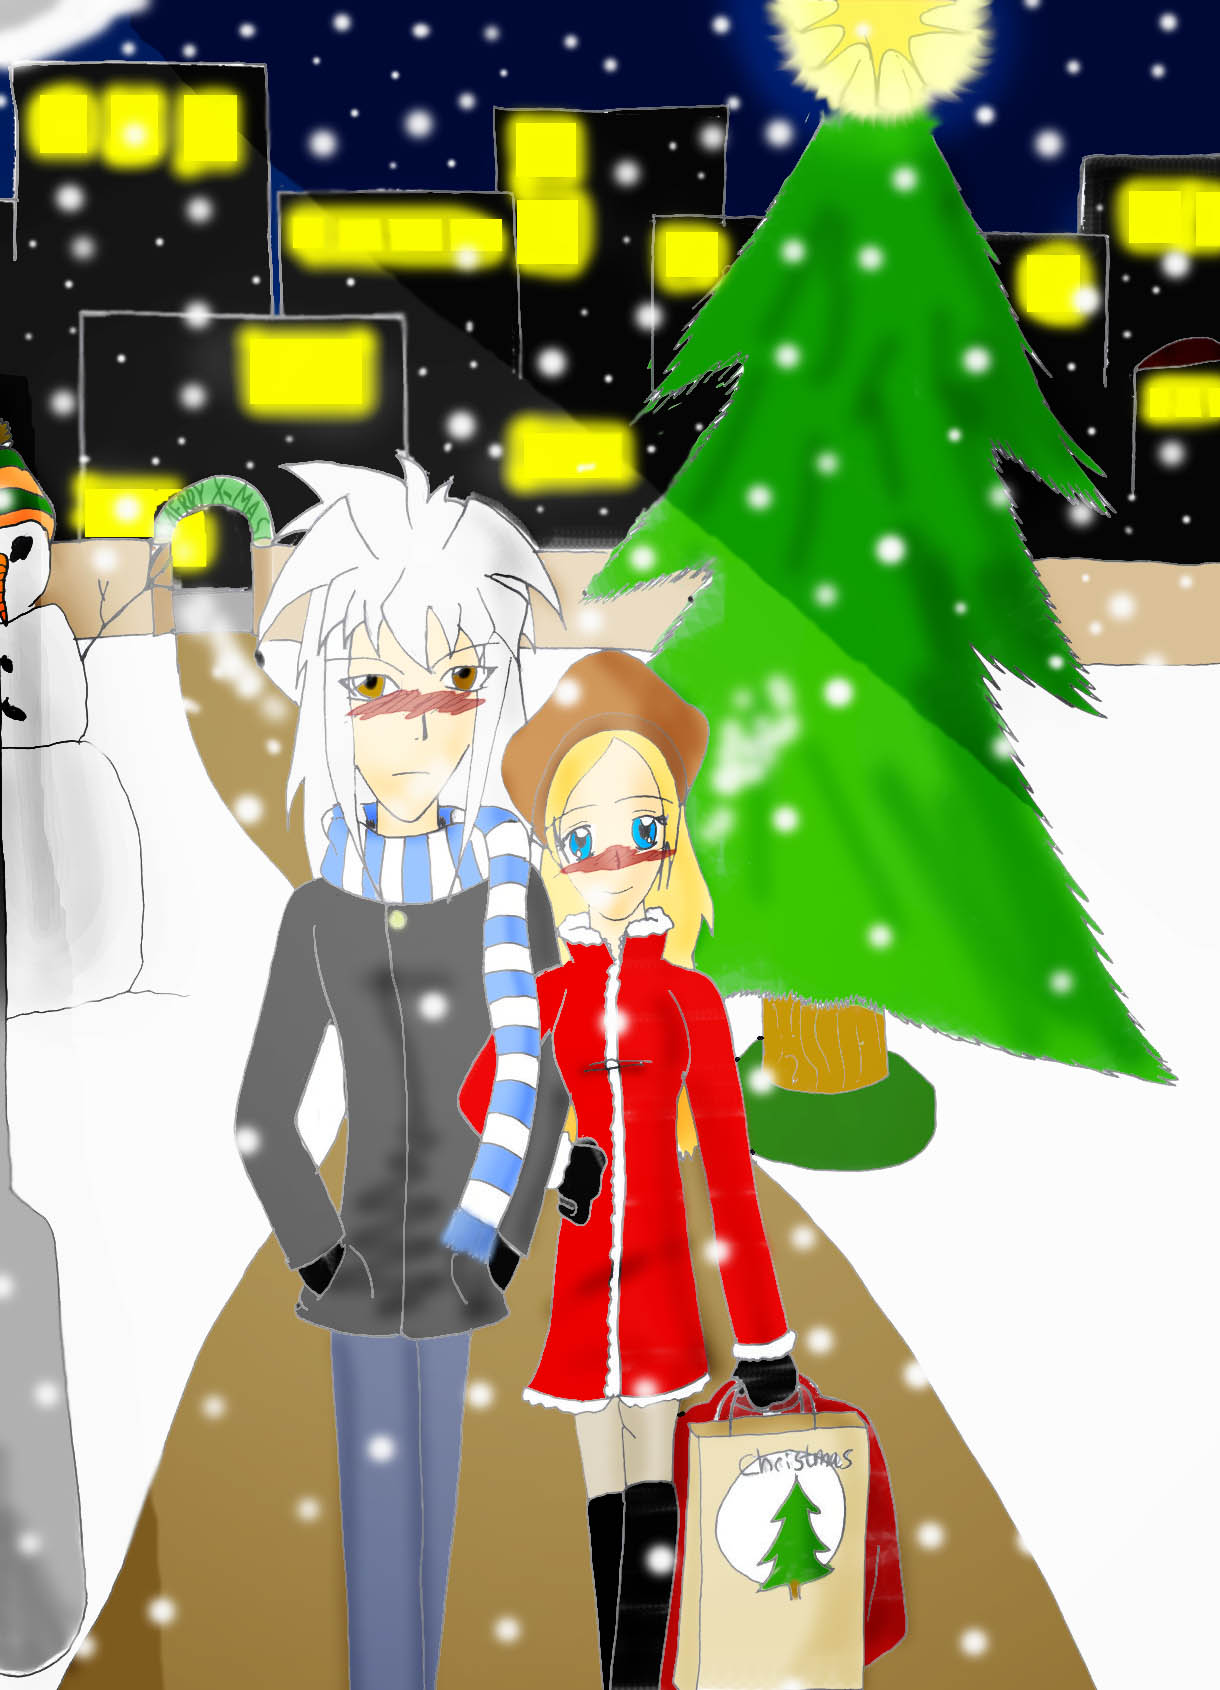 Bakura and me on Christmas walk by Bakura_Angel_of_Light